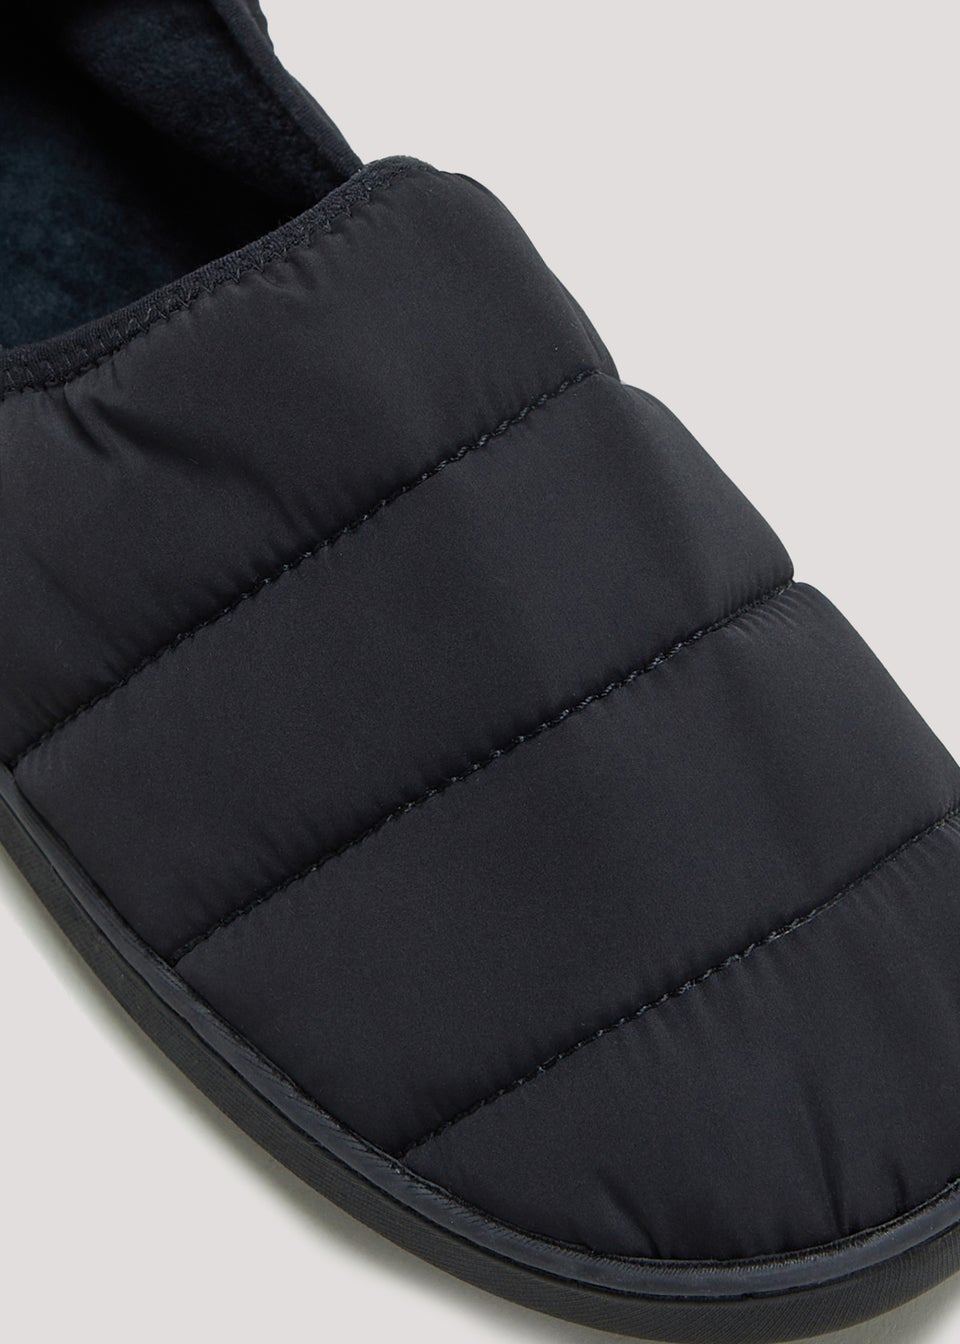 Black Thinsulate Baffle Slippers